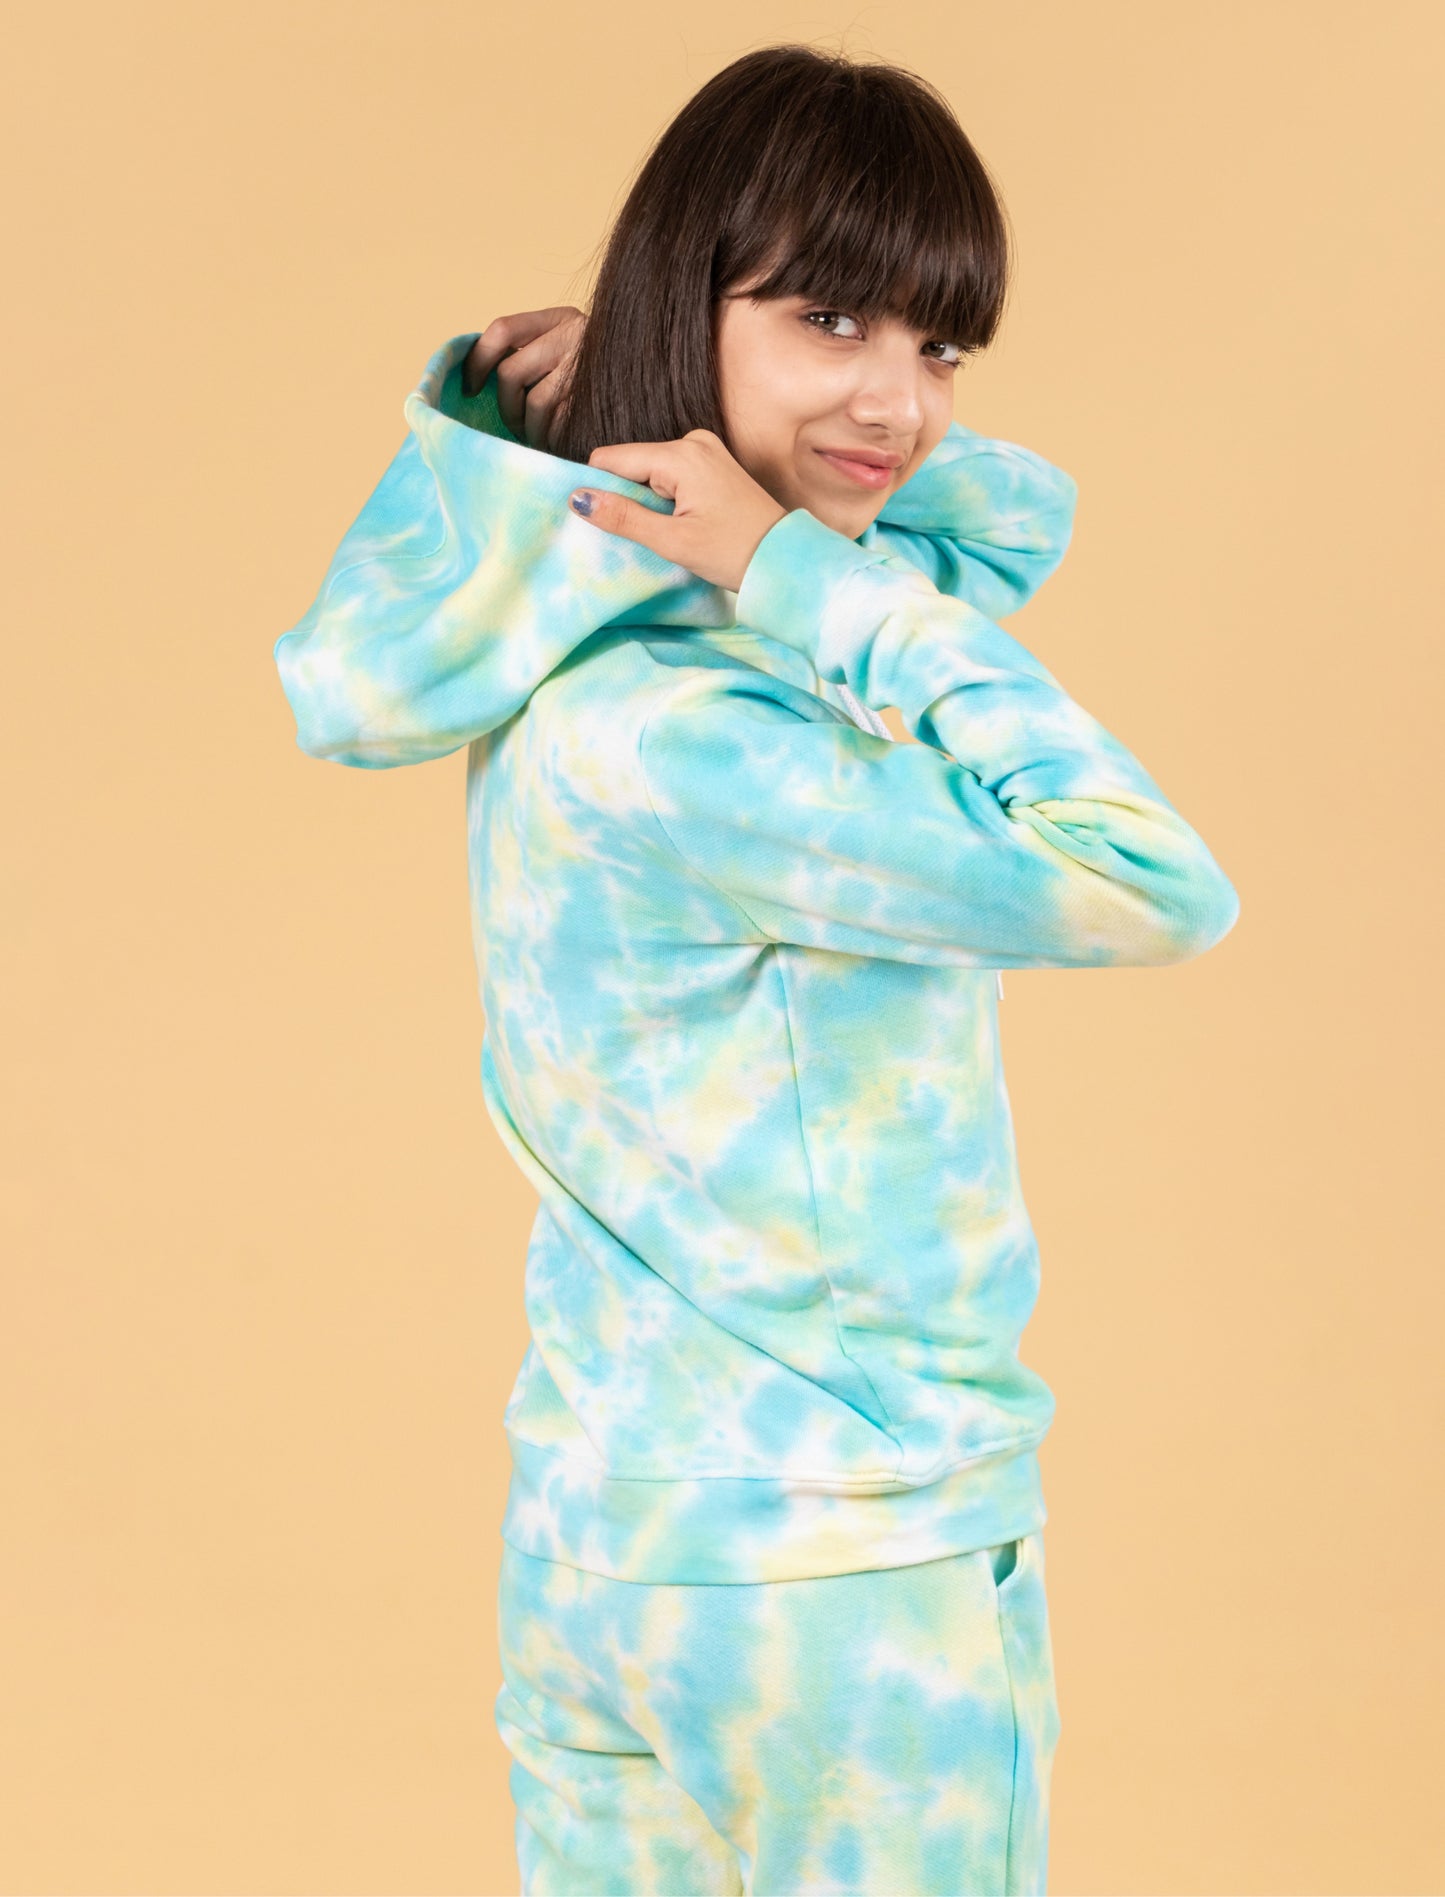 Girls Kids Winter Tie-Dye Hoodie Joggers Track Suit Set (Lemon Green)